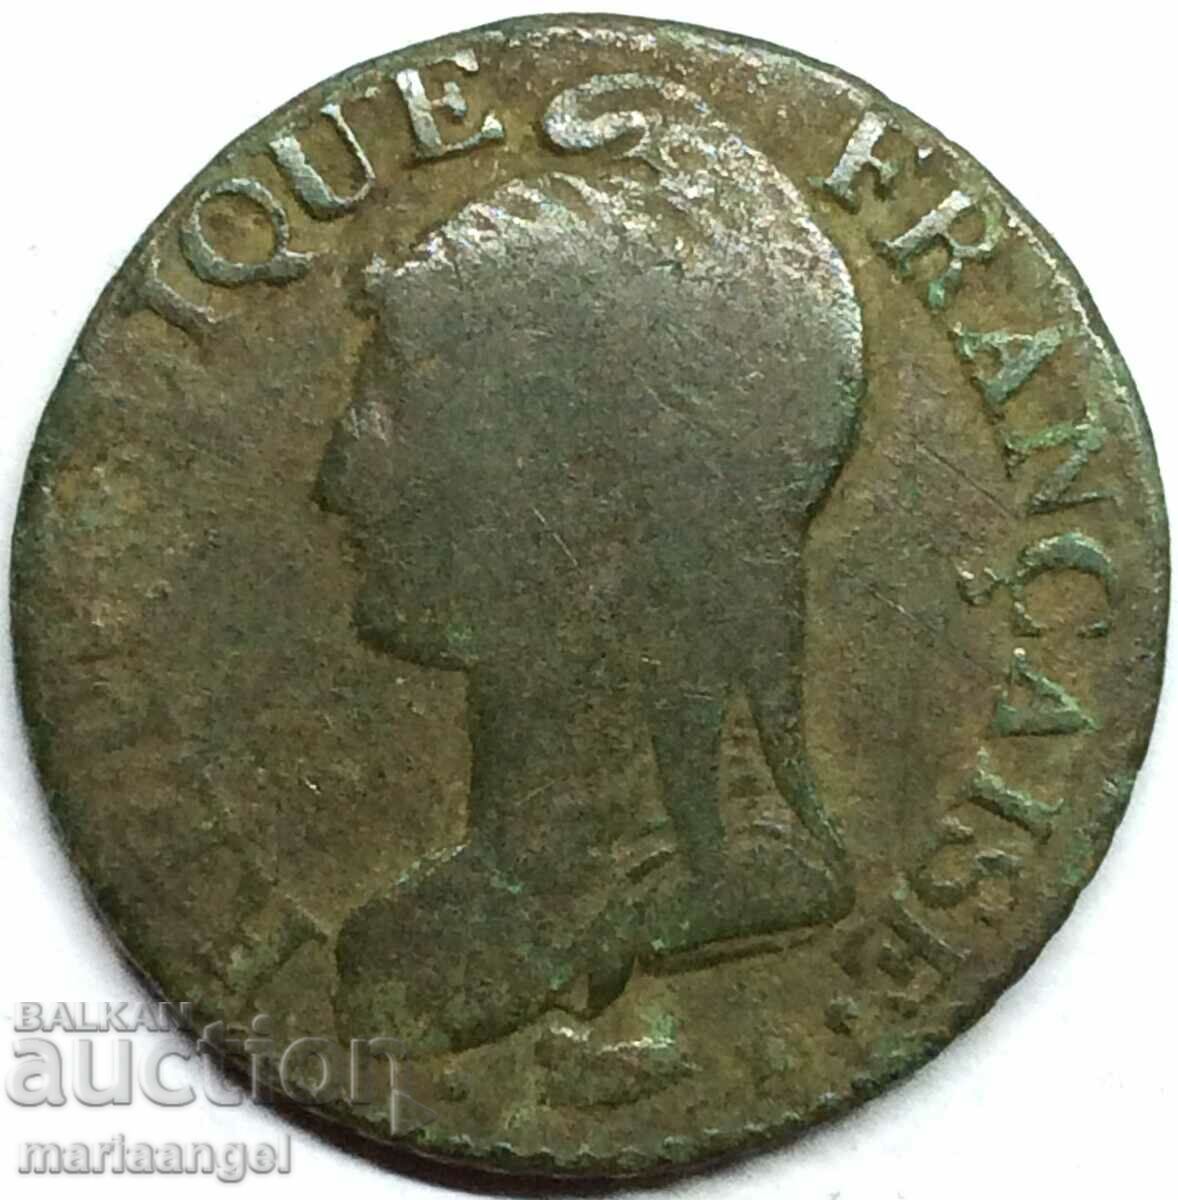 France 5 centimes 1793 Lan 2 - rare year